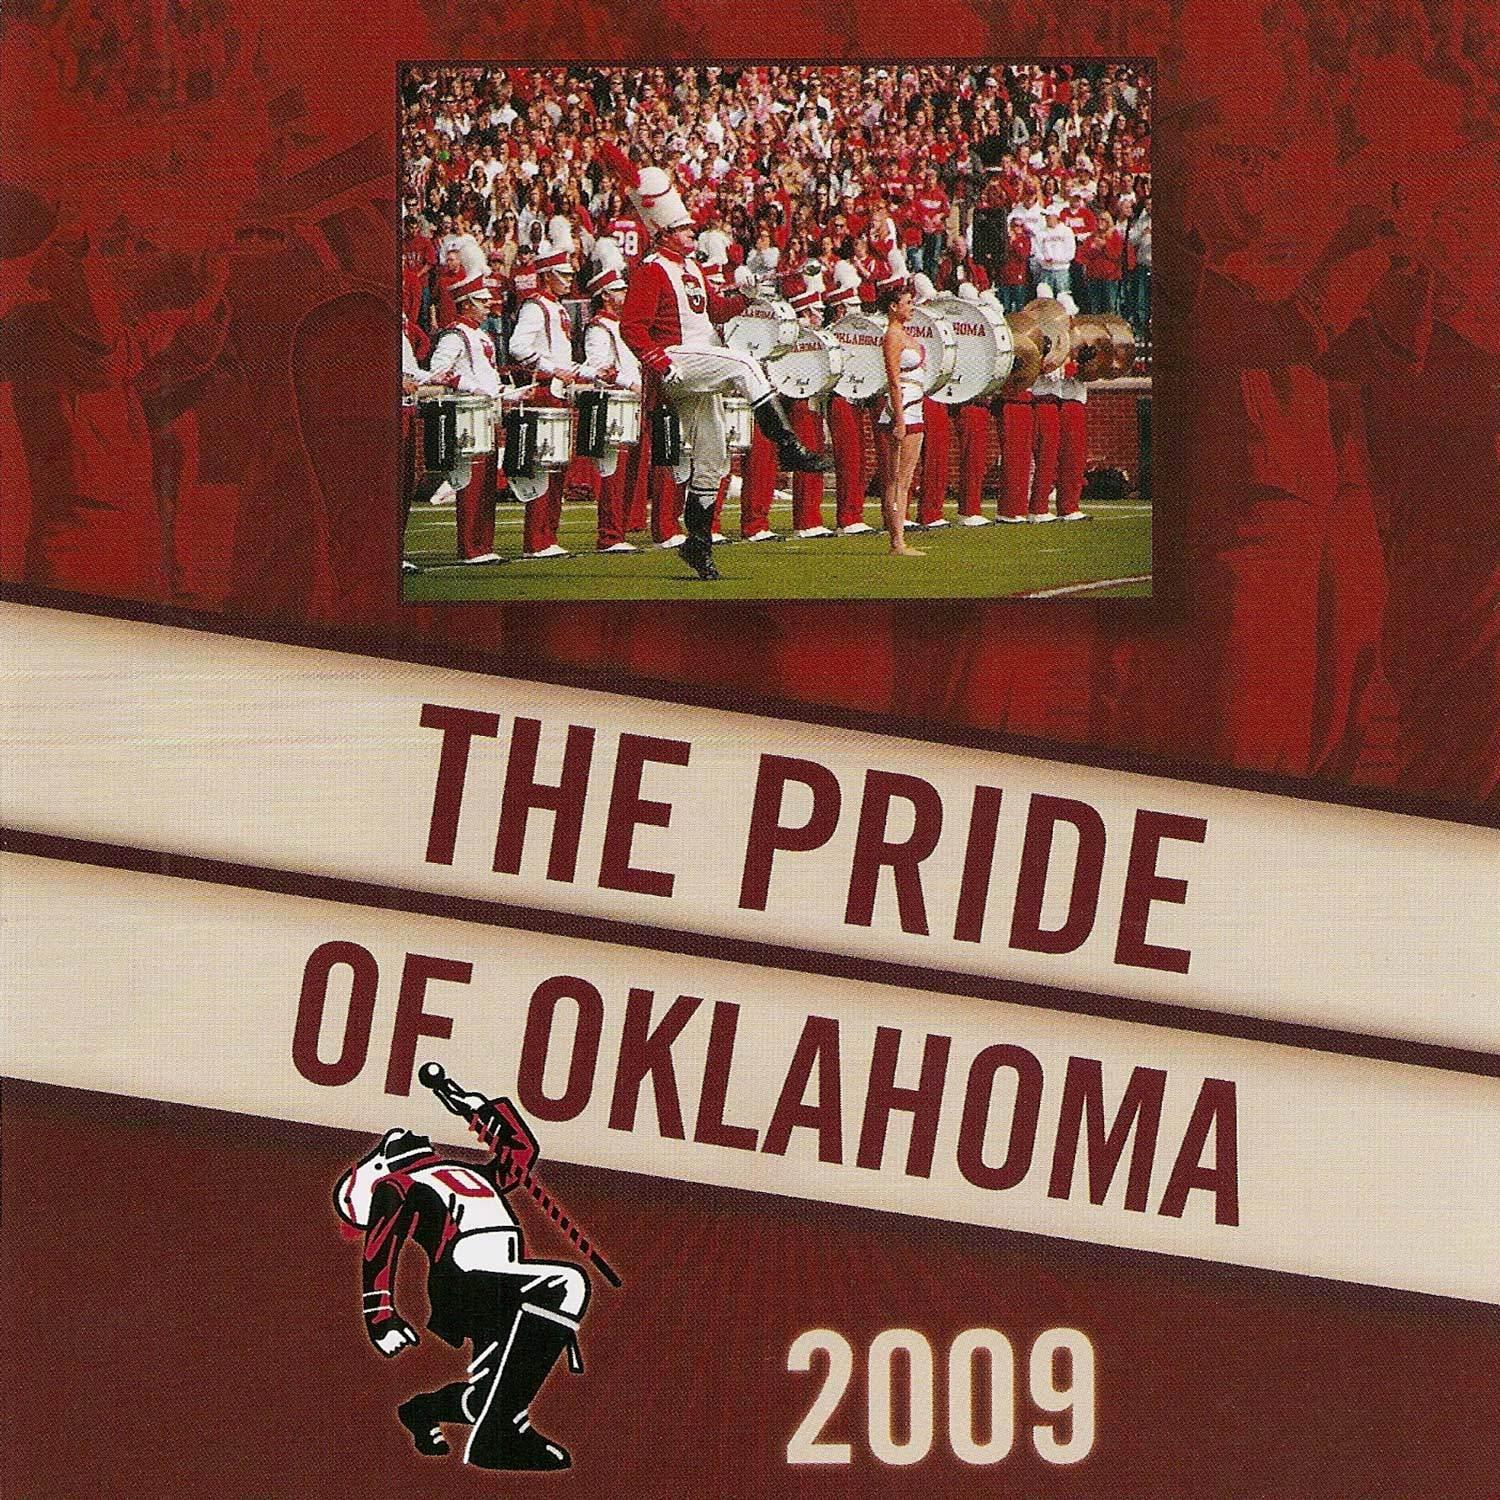 The Pride of Oklahoma 2009